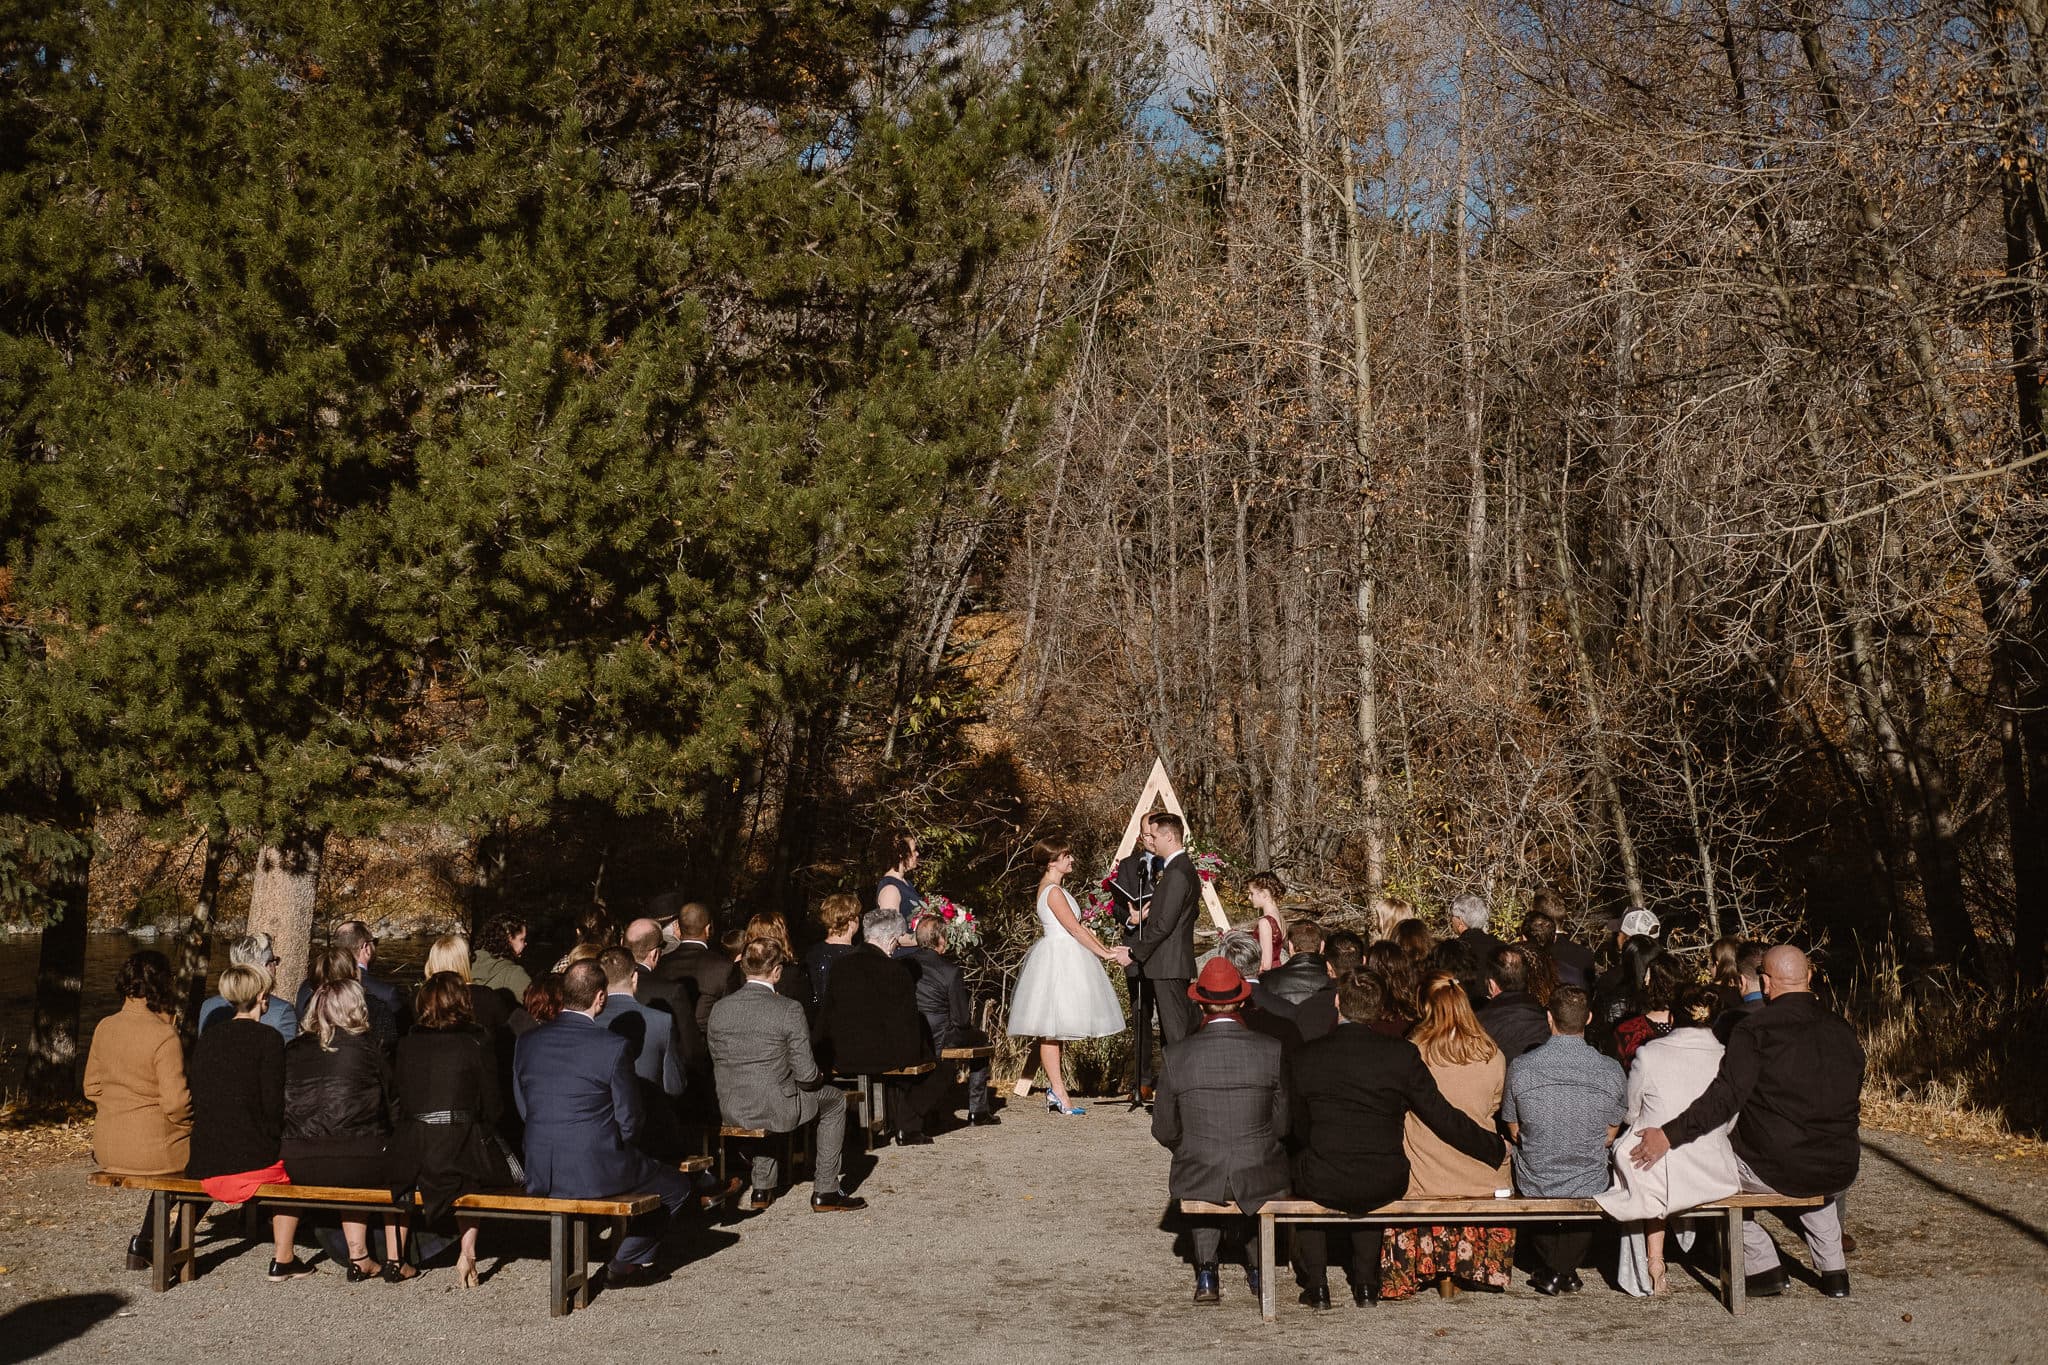 Silverthorne Pavilion wedding ceremony, Colorado wedding photographer, outdoor wedding ceremony, Colorado mountain wedding venues